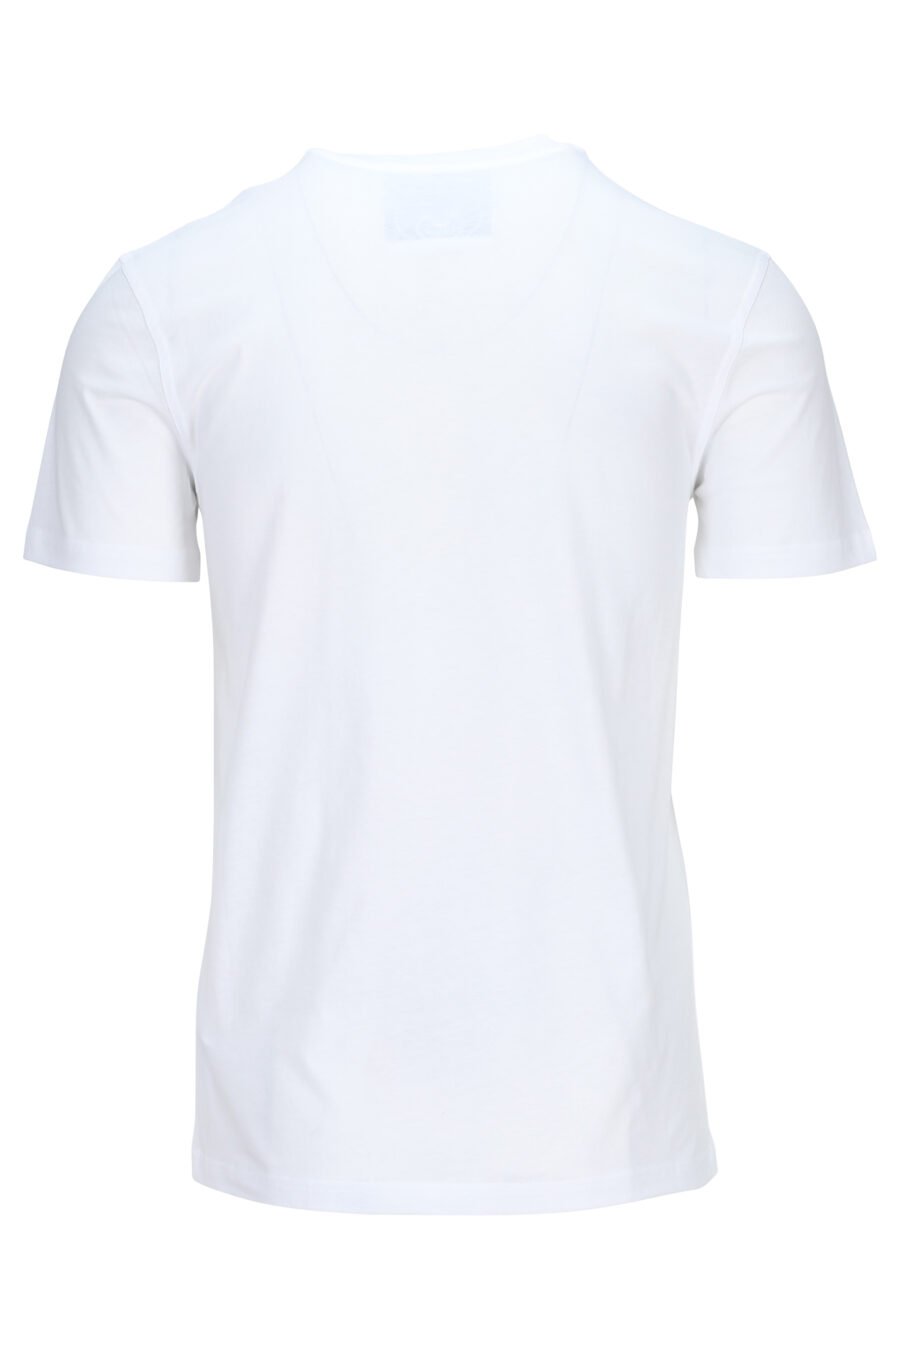 White T-shirt with eco cotton with black mini-logo "teddy" - 889316853131 1